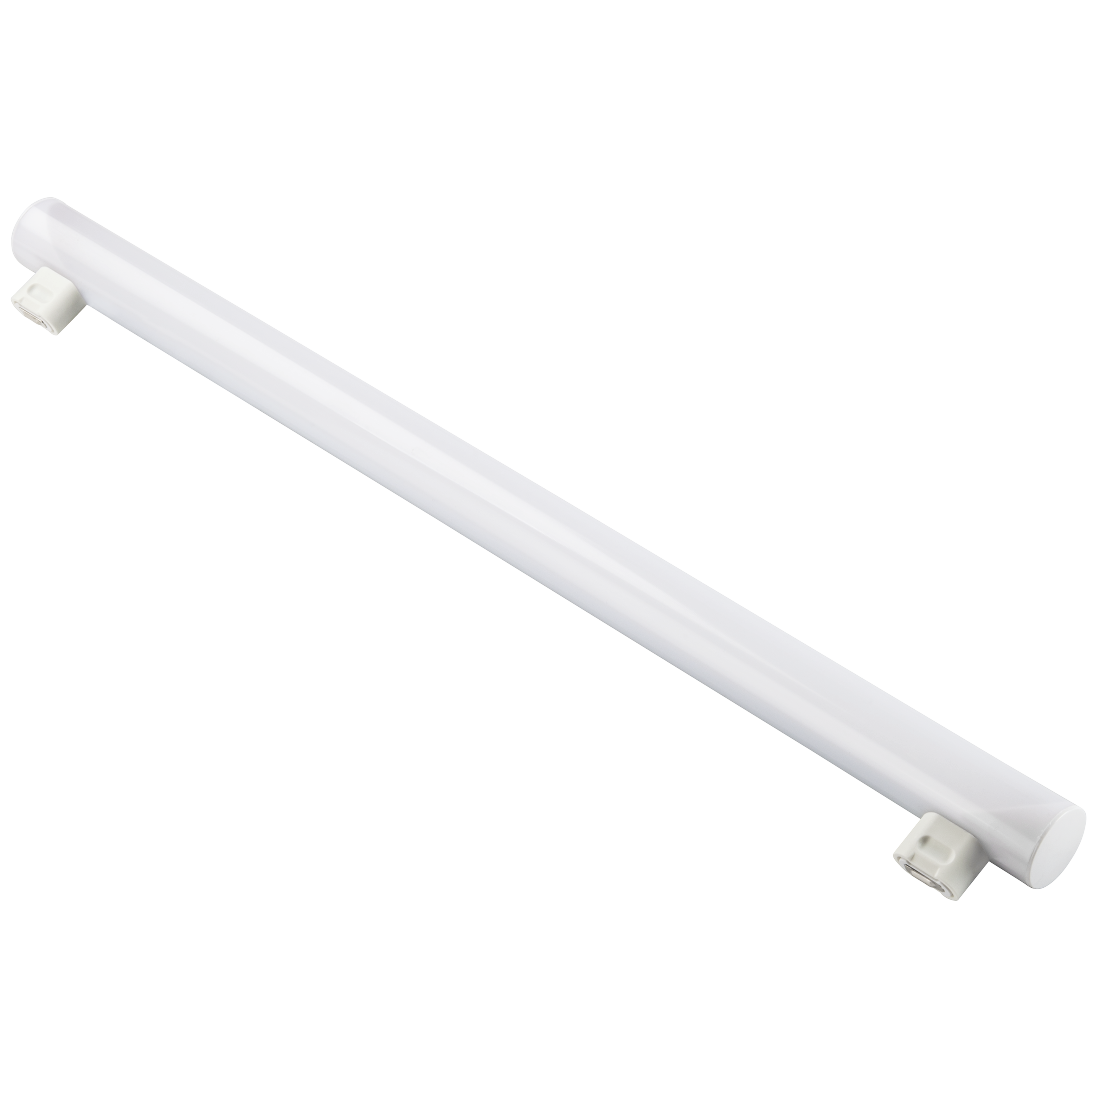 abx2 High-Res Image 2 - Xavax, Ampoule LED, S14s, 640 lm rempl. 50 W, tube, 50 cm, blanc chaud